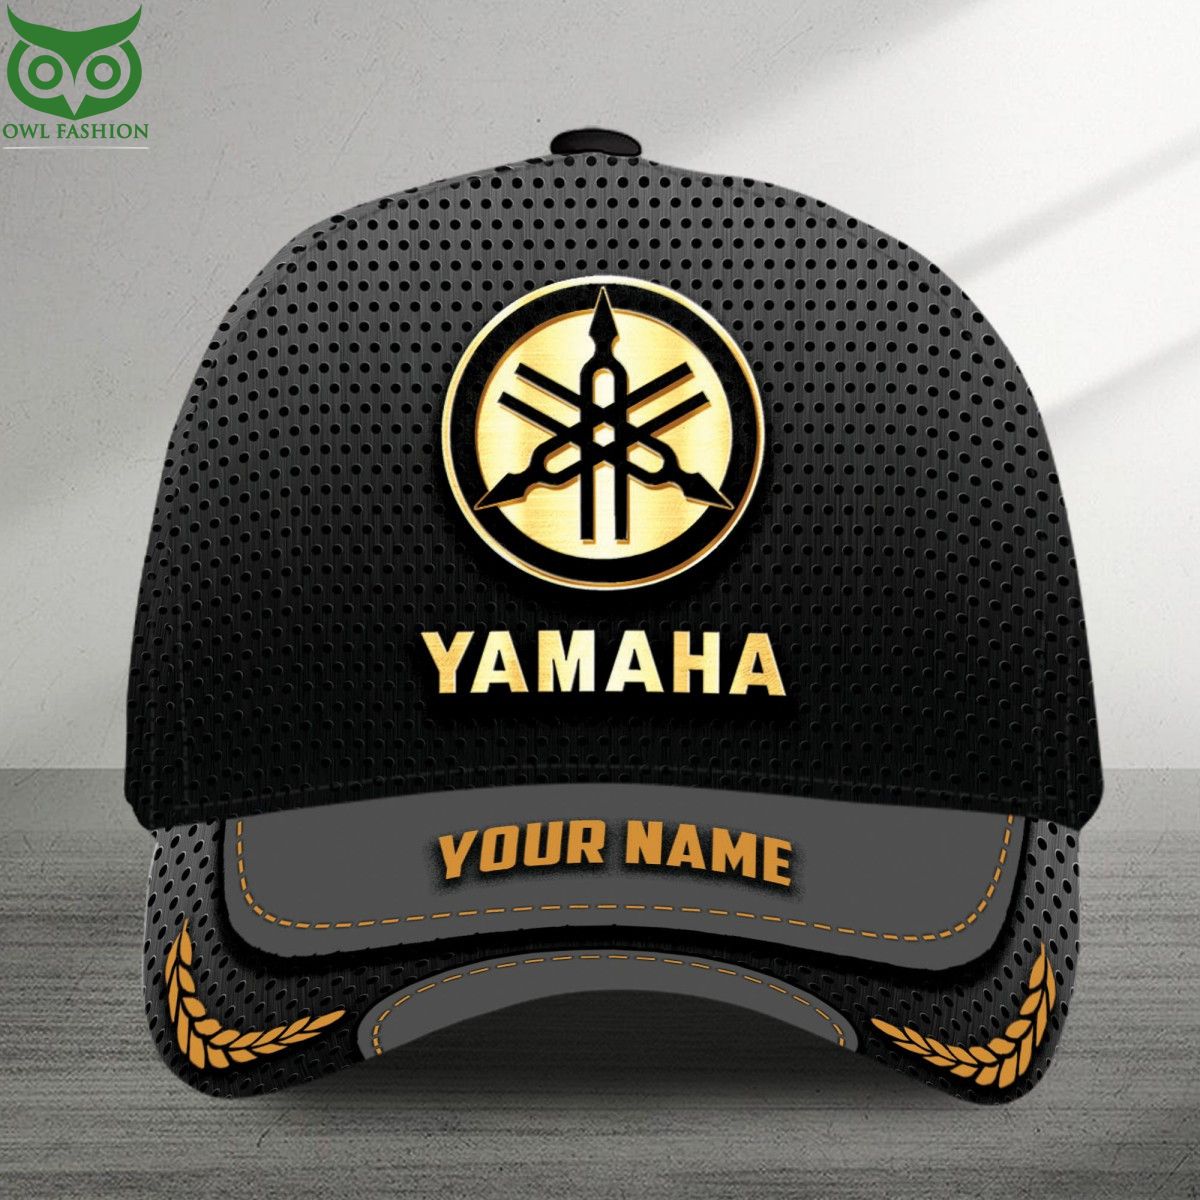 Yamaha Motor Design New Classic Cap Loving, dare I say?